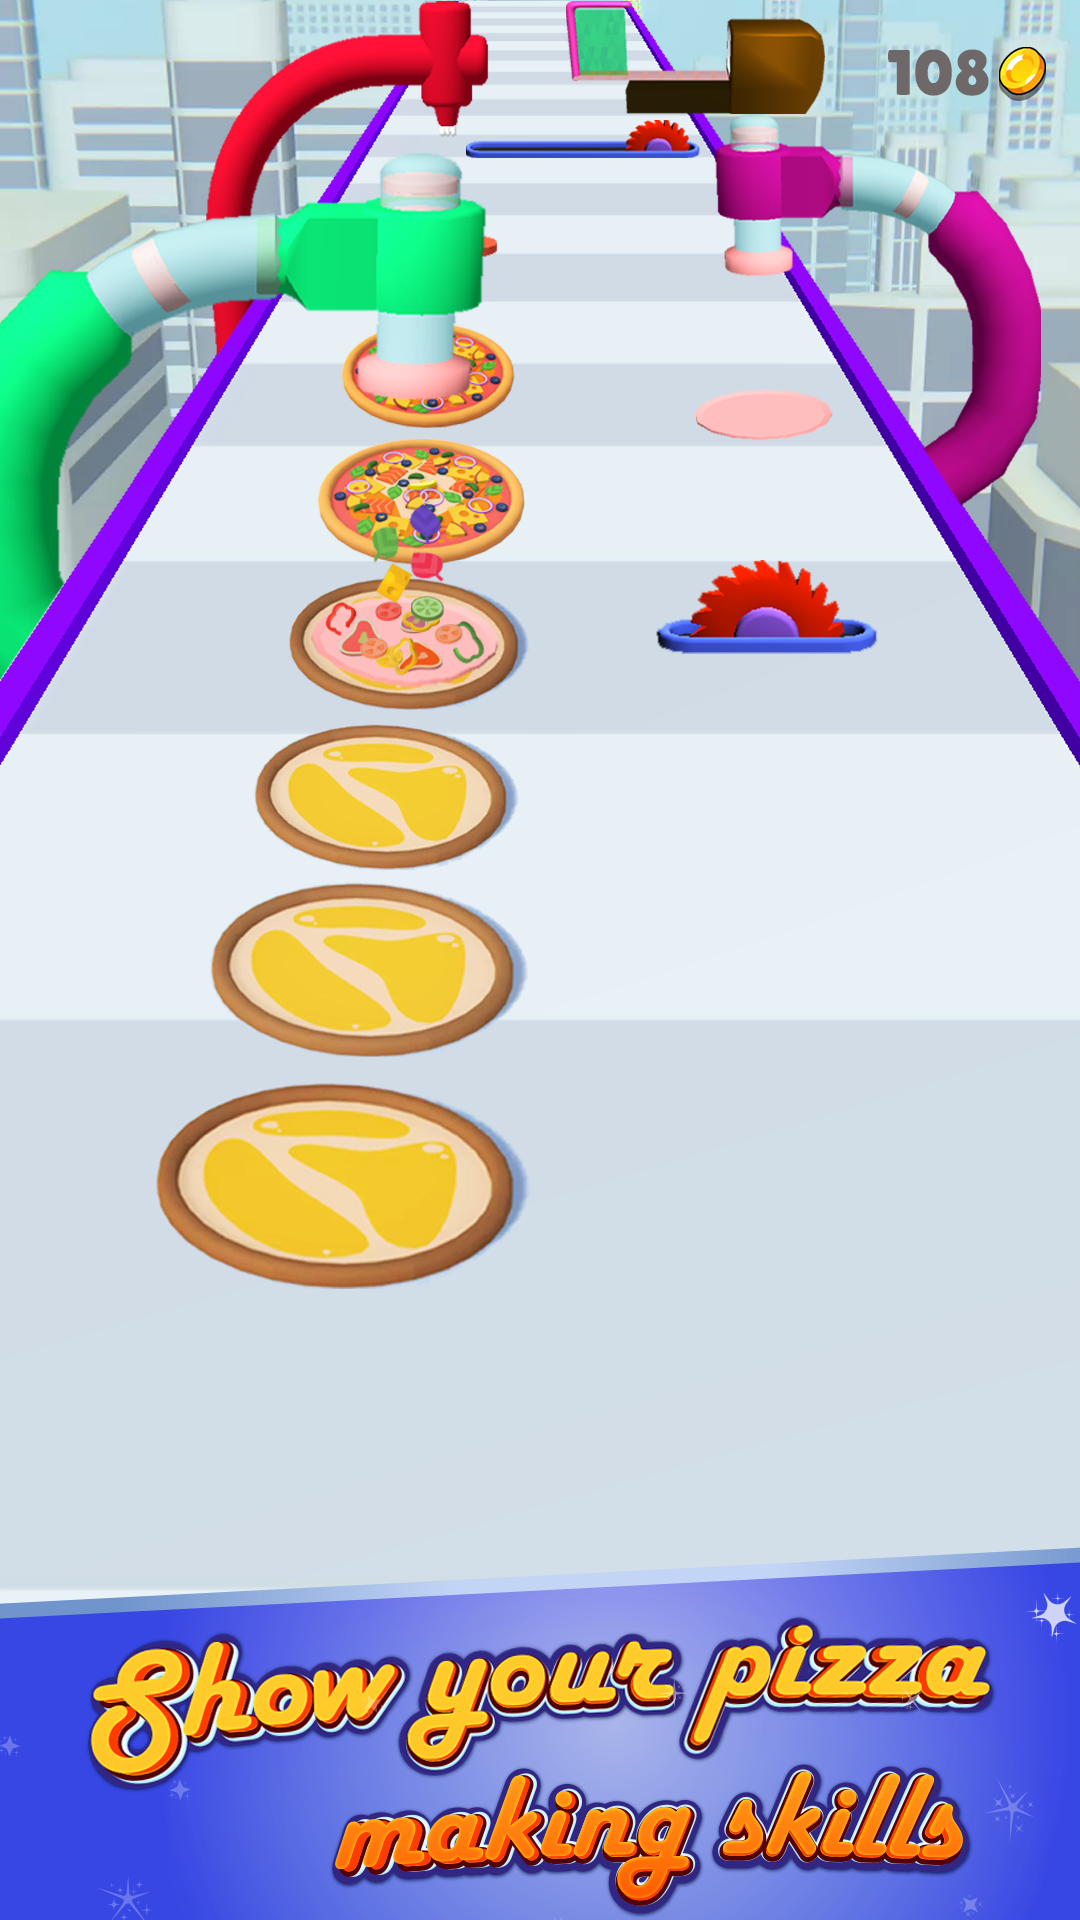 Download do APK de Pizza Simulator: 3D Cooking para Android